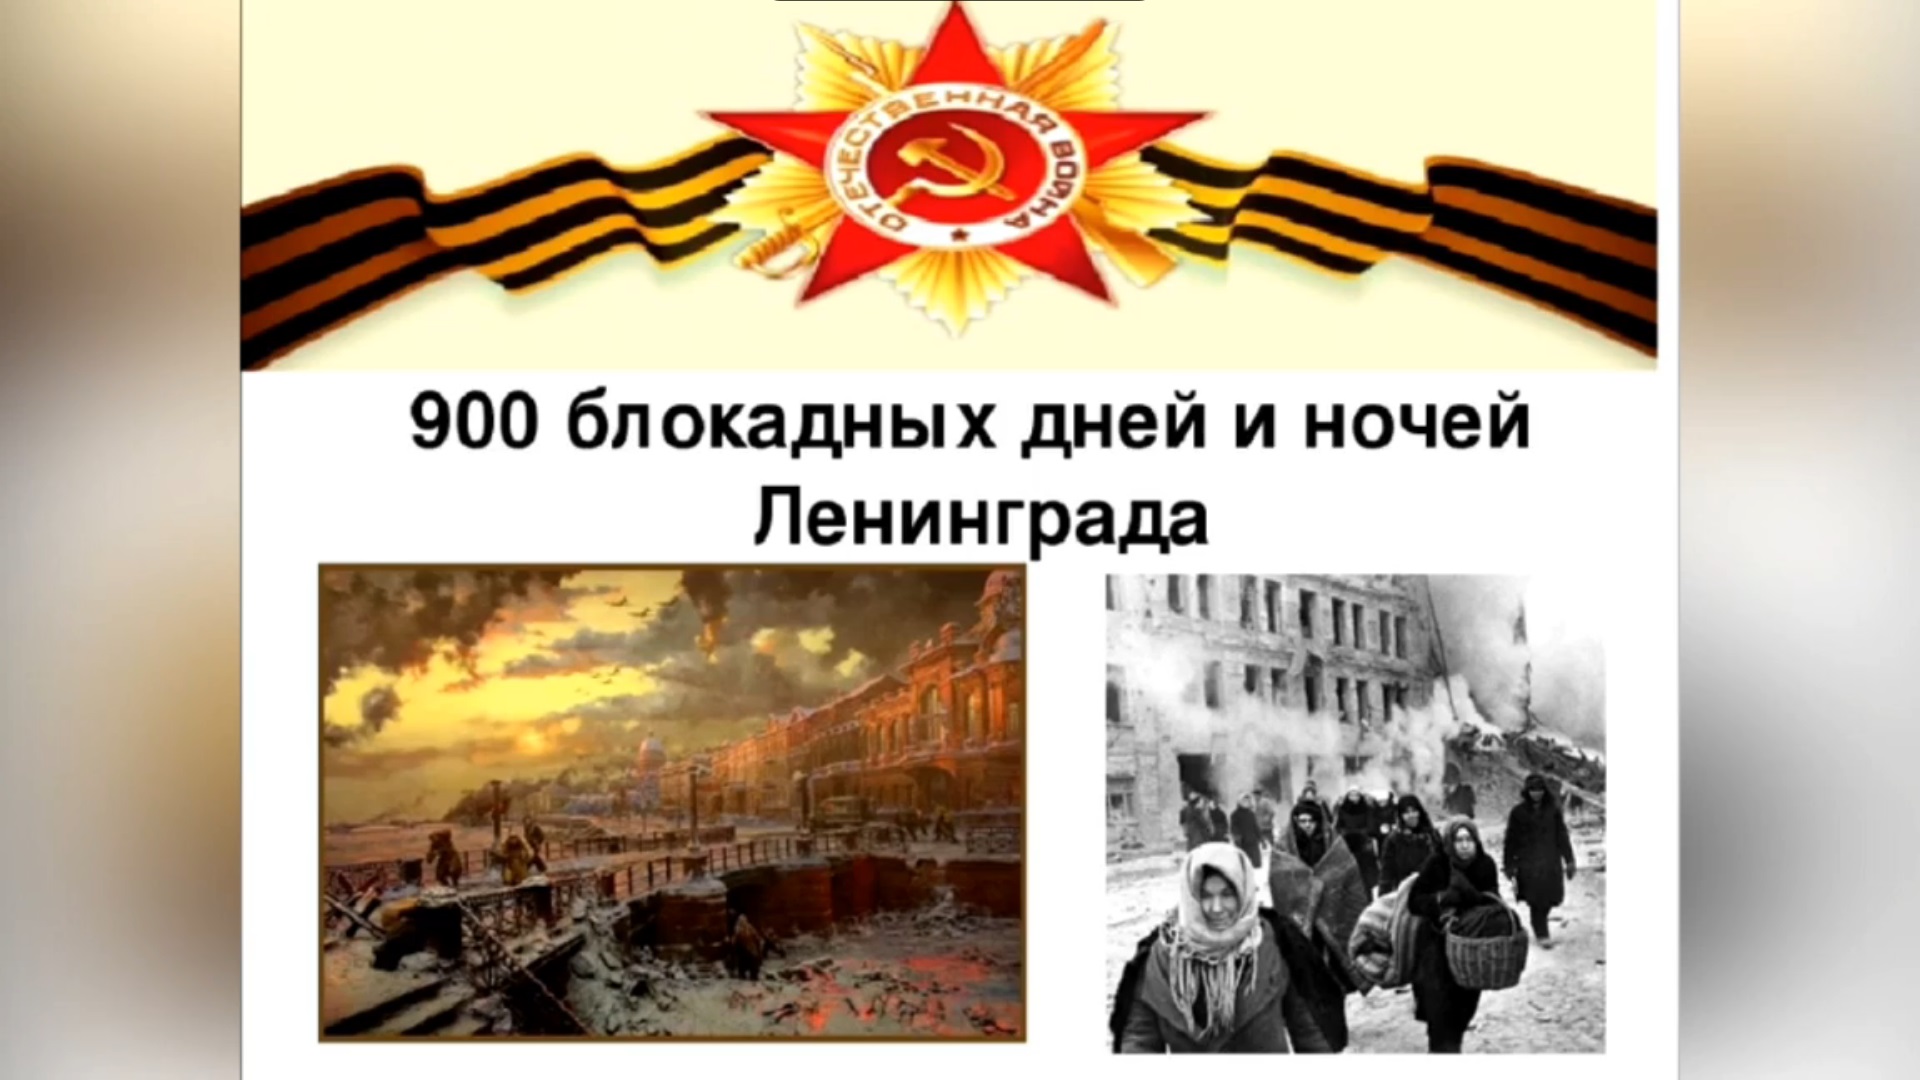 Deti blokadnogo Leningrada 27.01.2021